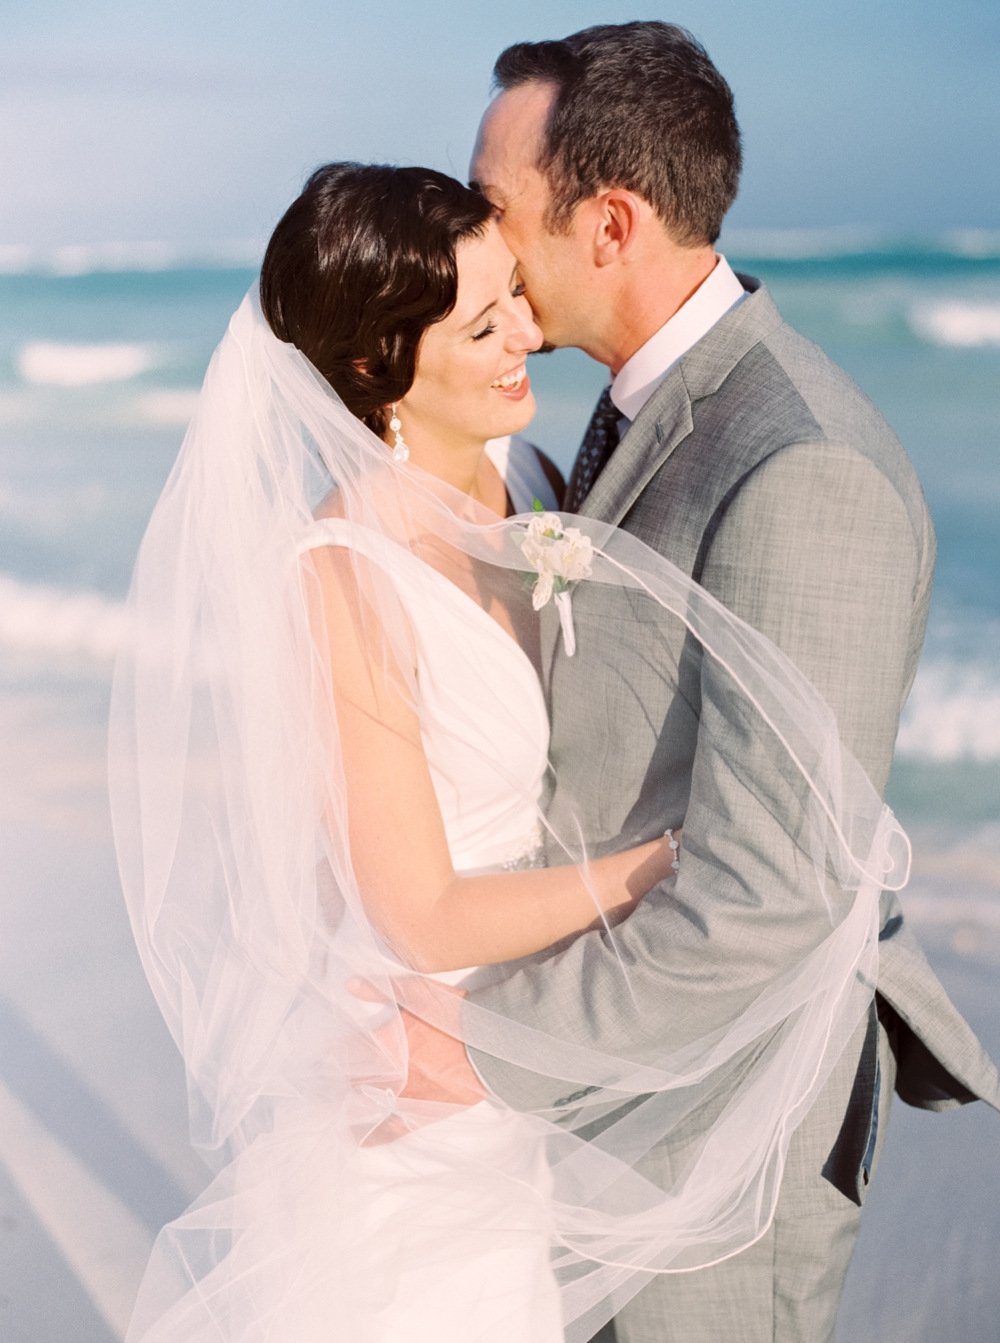 Destination wedding photographer | beach wedding | Calgary wedding photographers | Mexico wedding photography